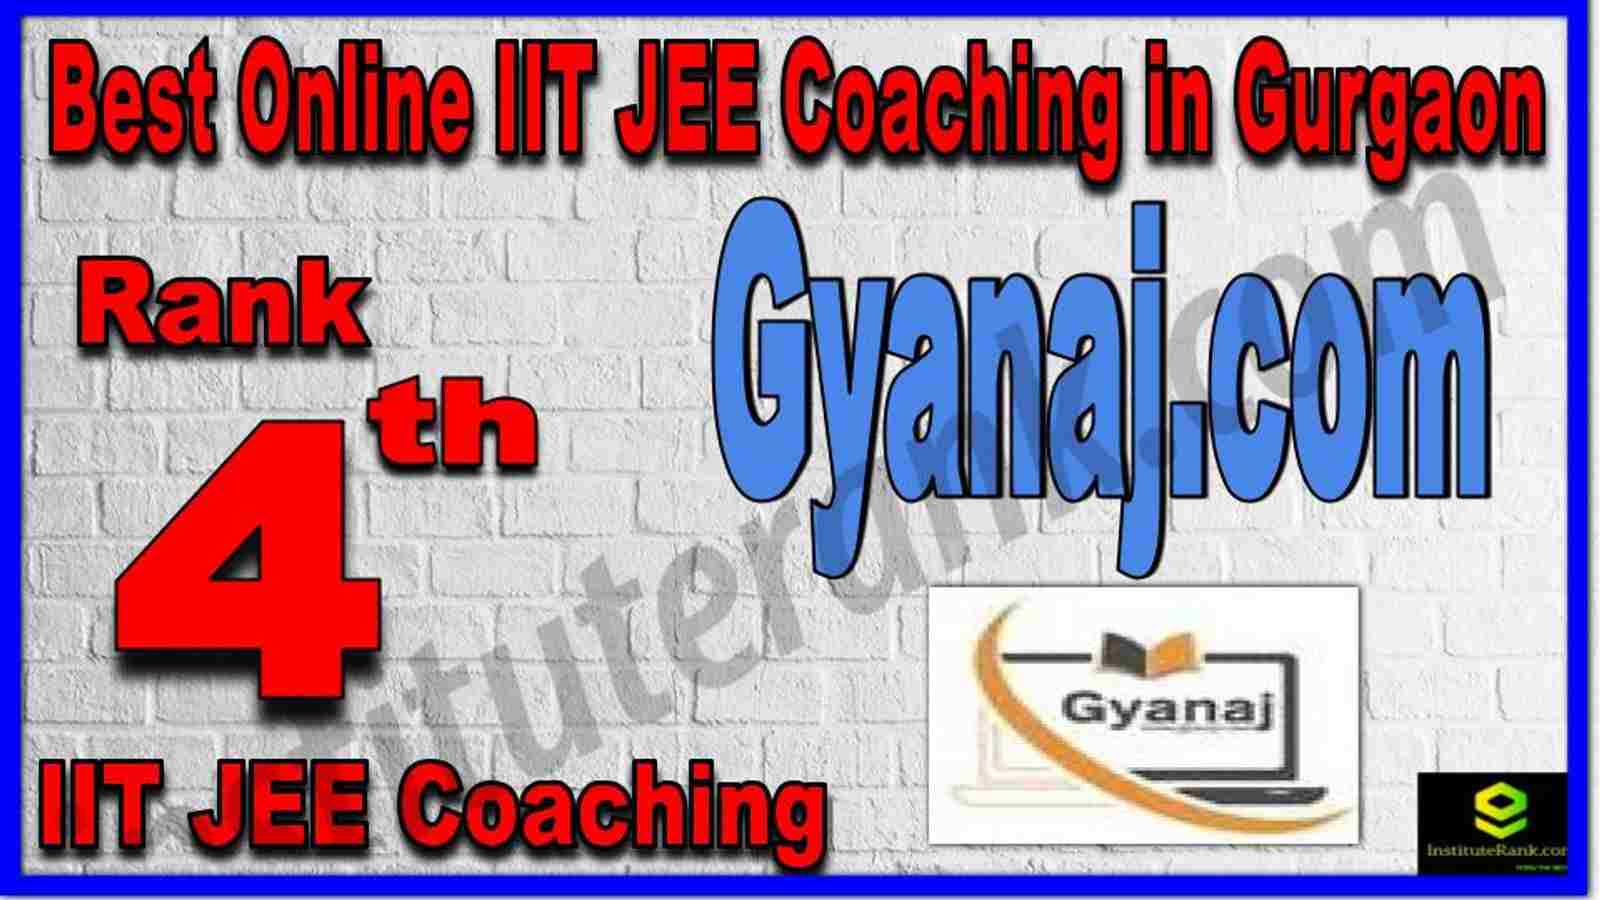 Rank 4th Best Online IIT JEE Coaching in Gurgaon